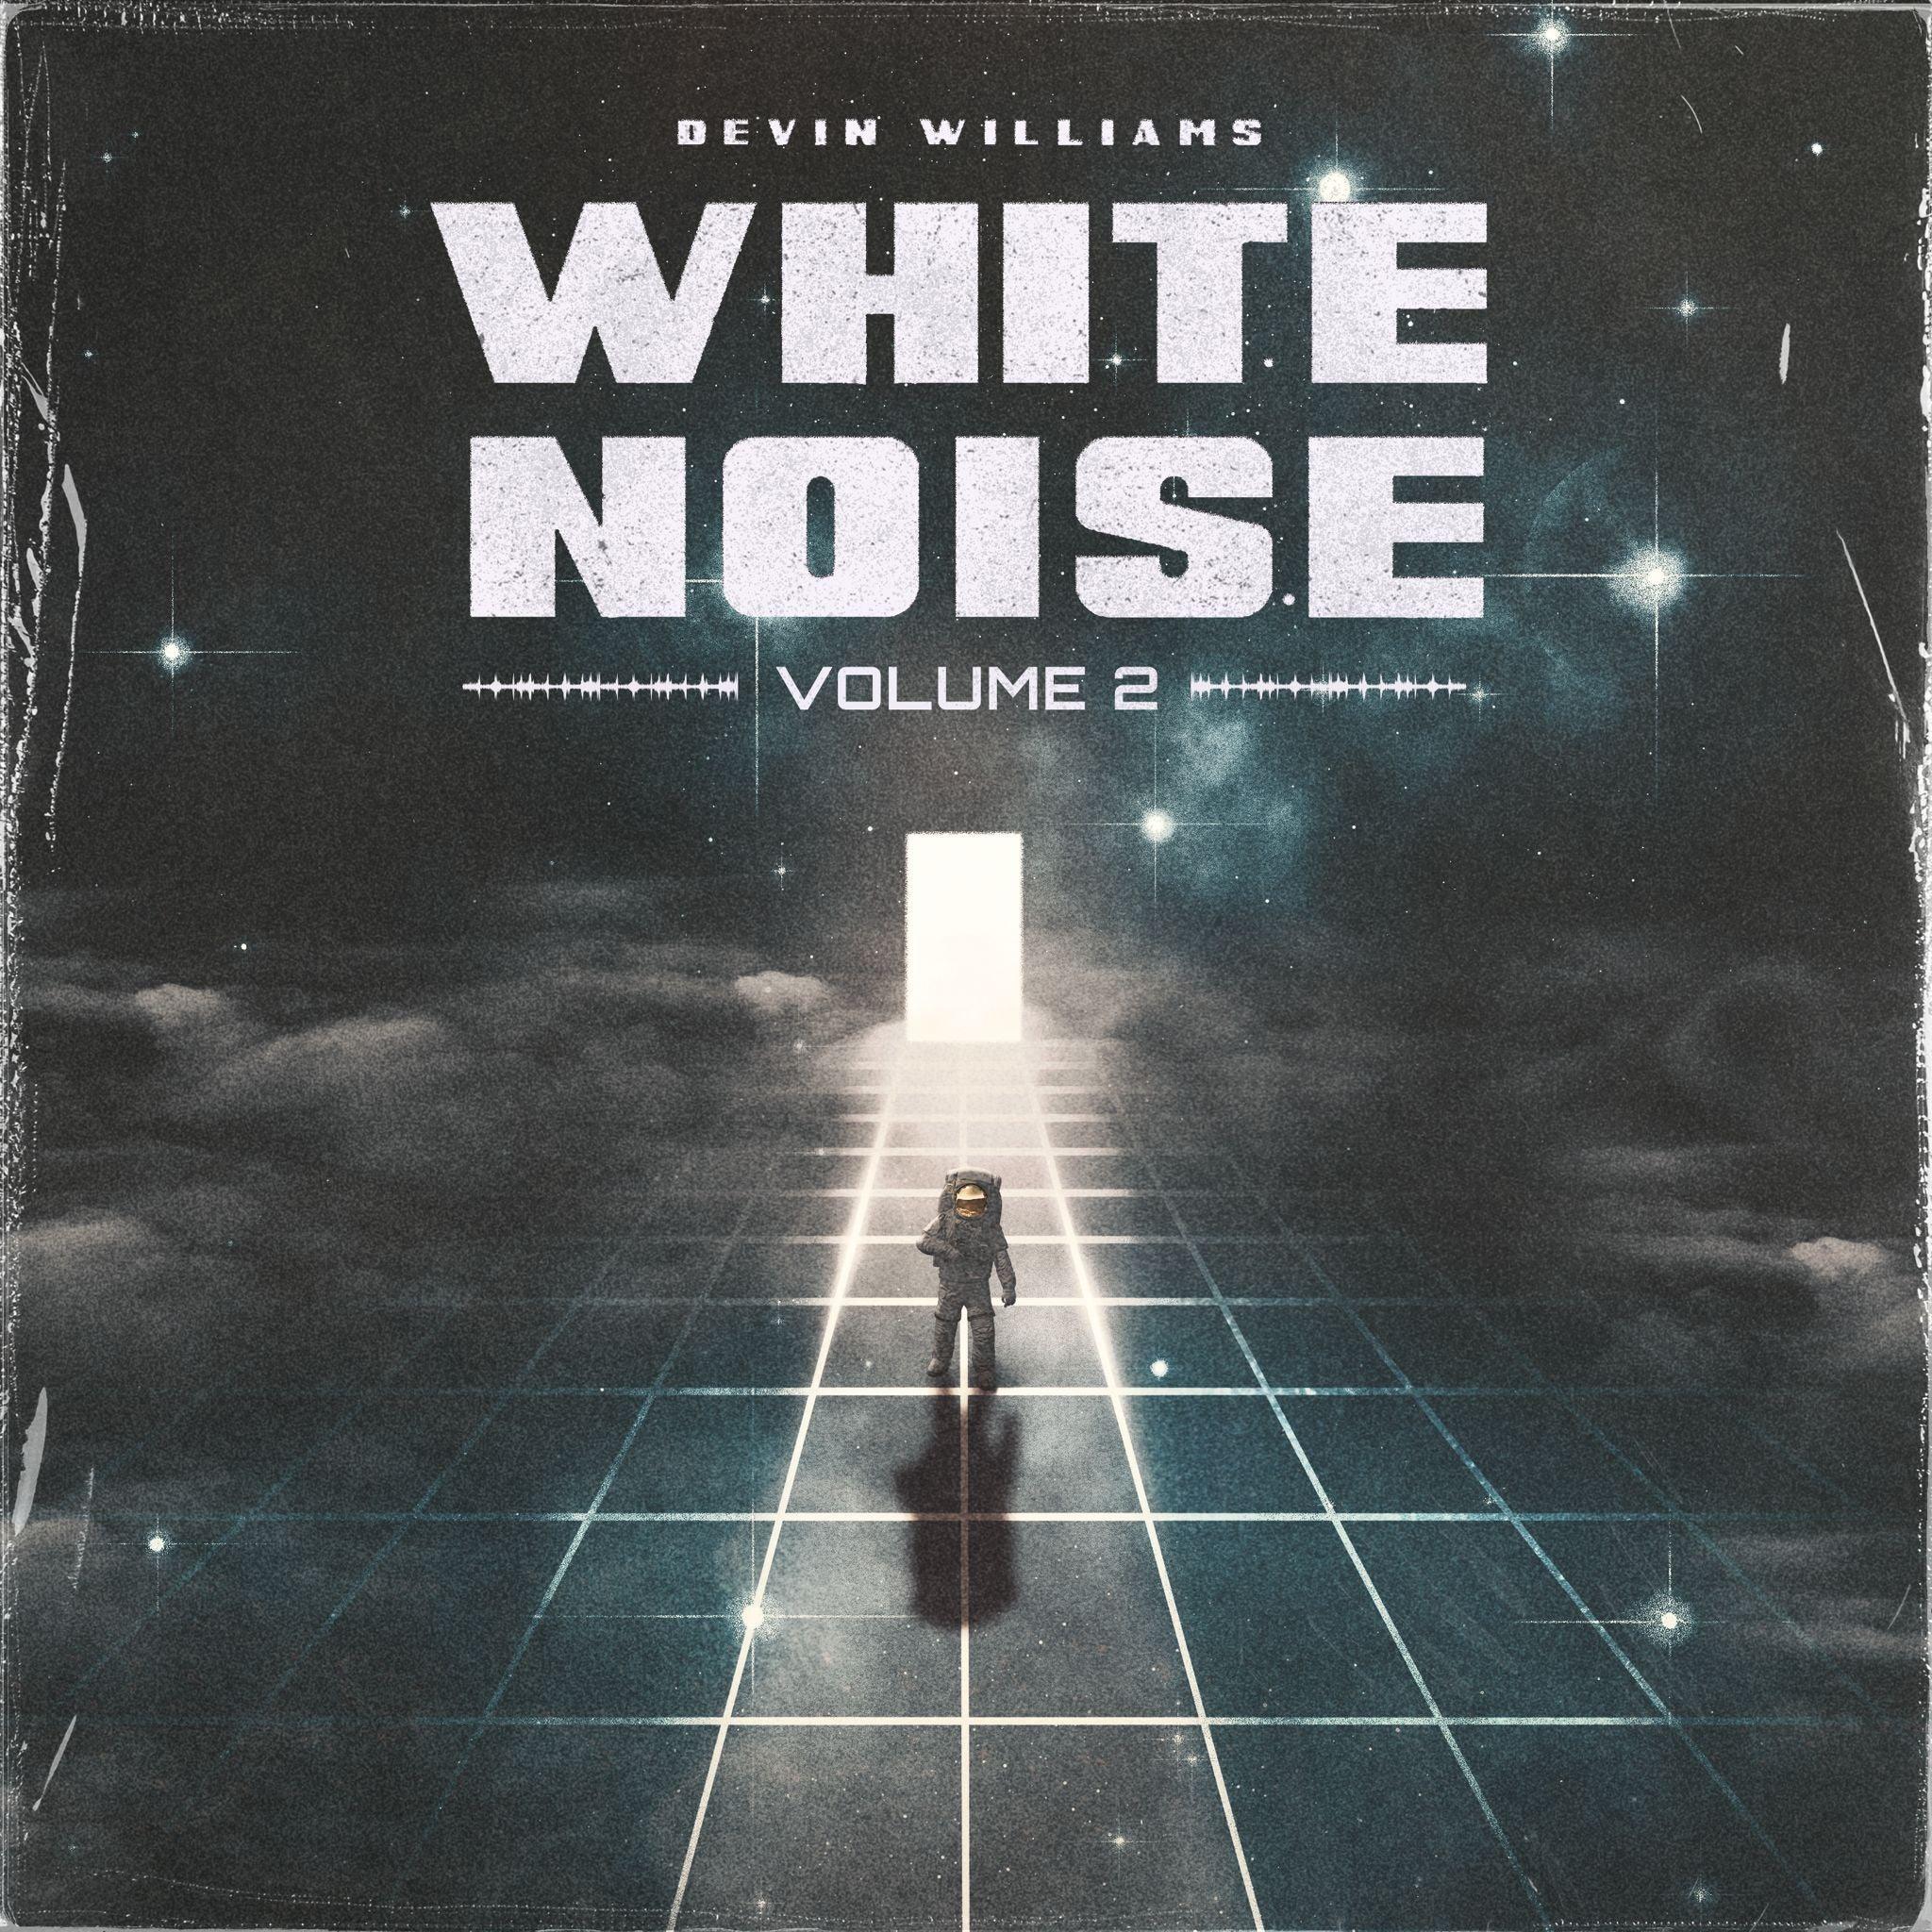 White Noise Volume 2 - The Sample Lab